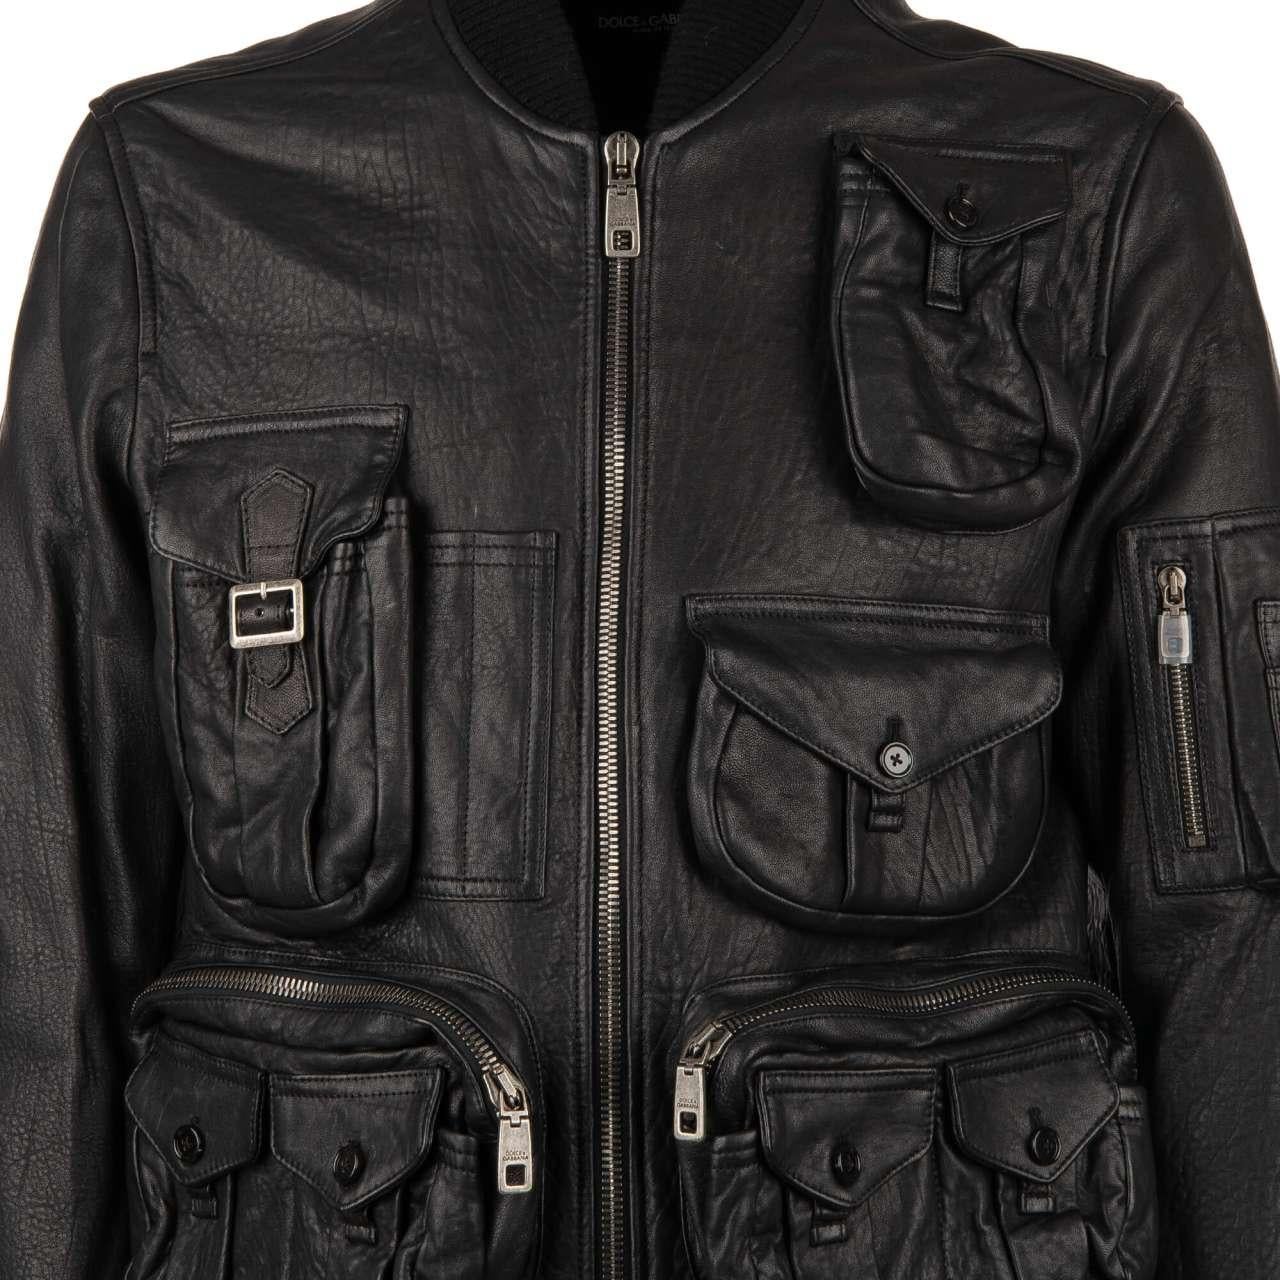 Dolce & Gabbana - Multi-Pocket Military Inspired Nappa Leather Jacket Black 48 For Sale 1